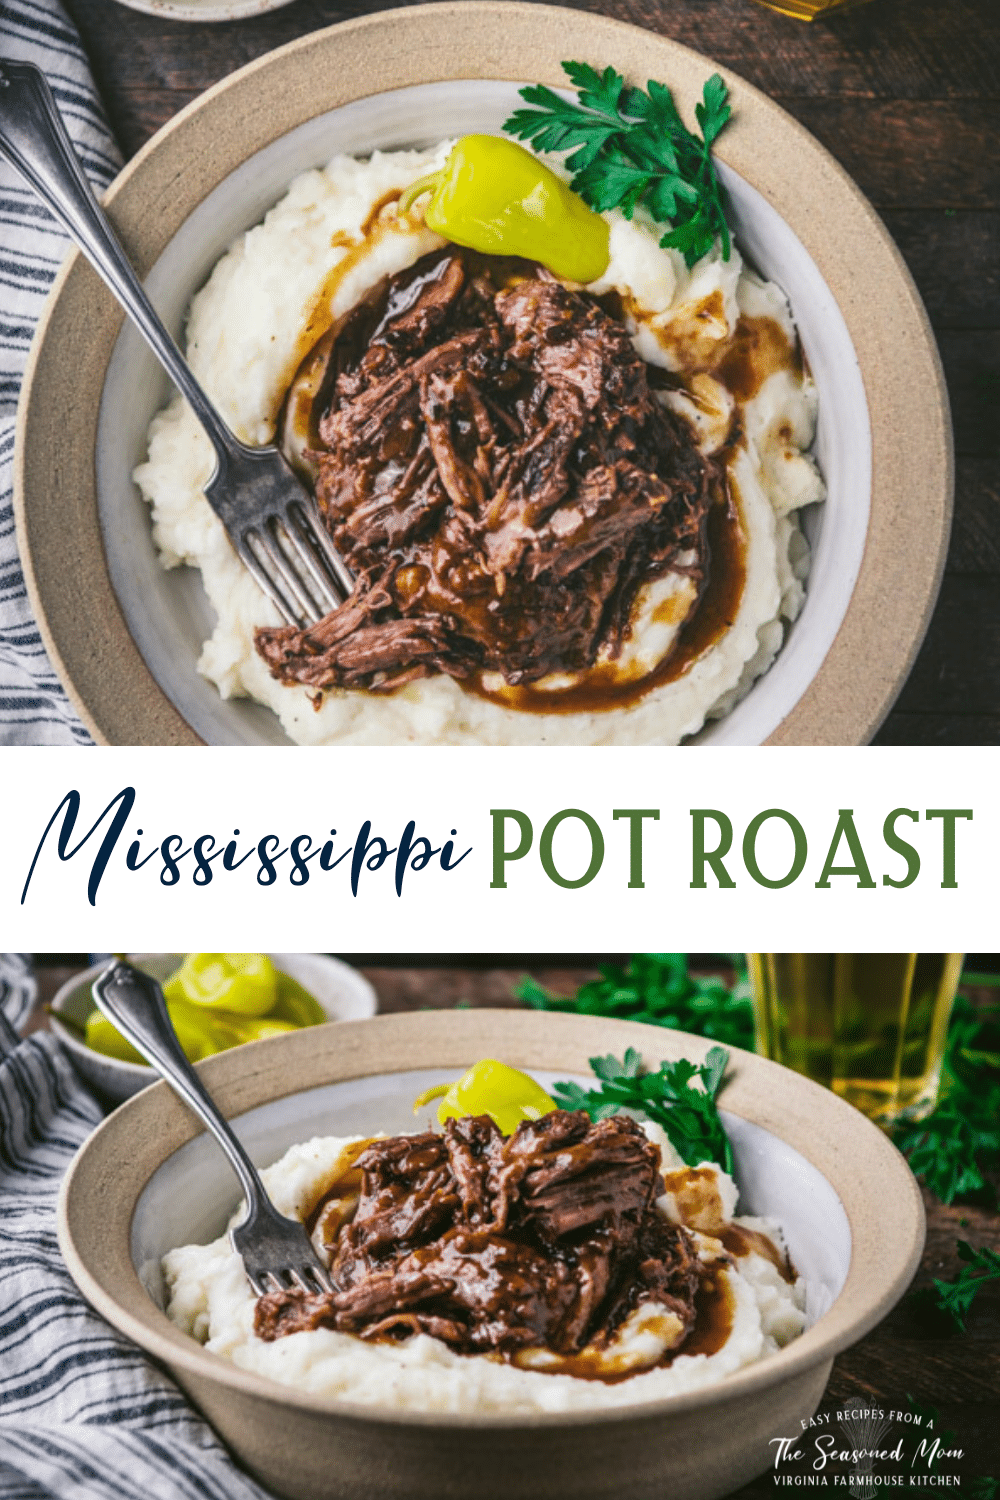 Long collage image of Mississippi Pot Roast